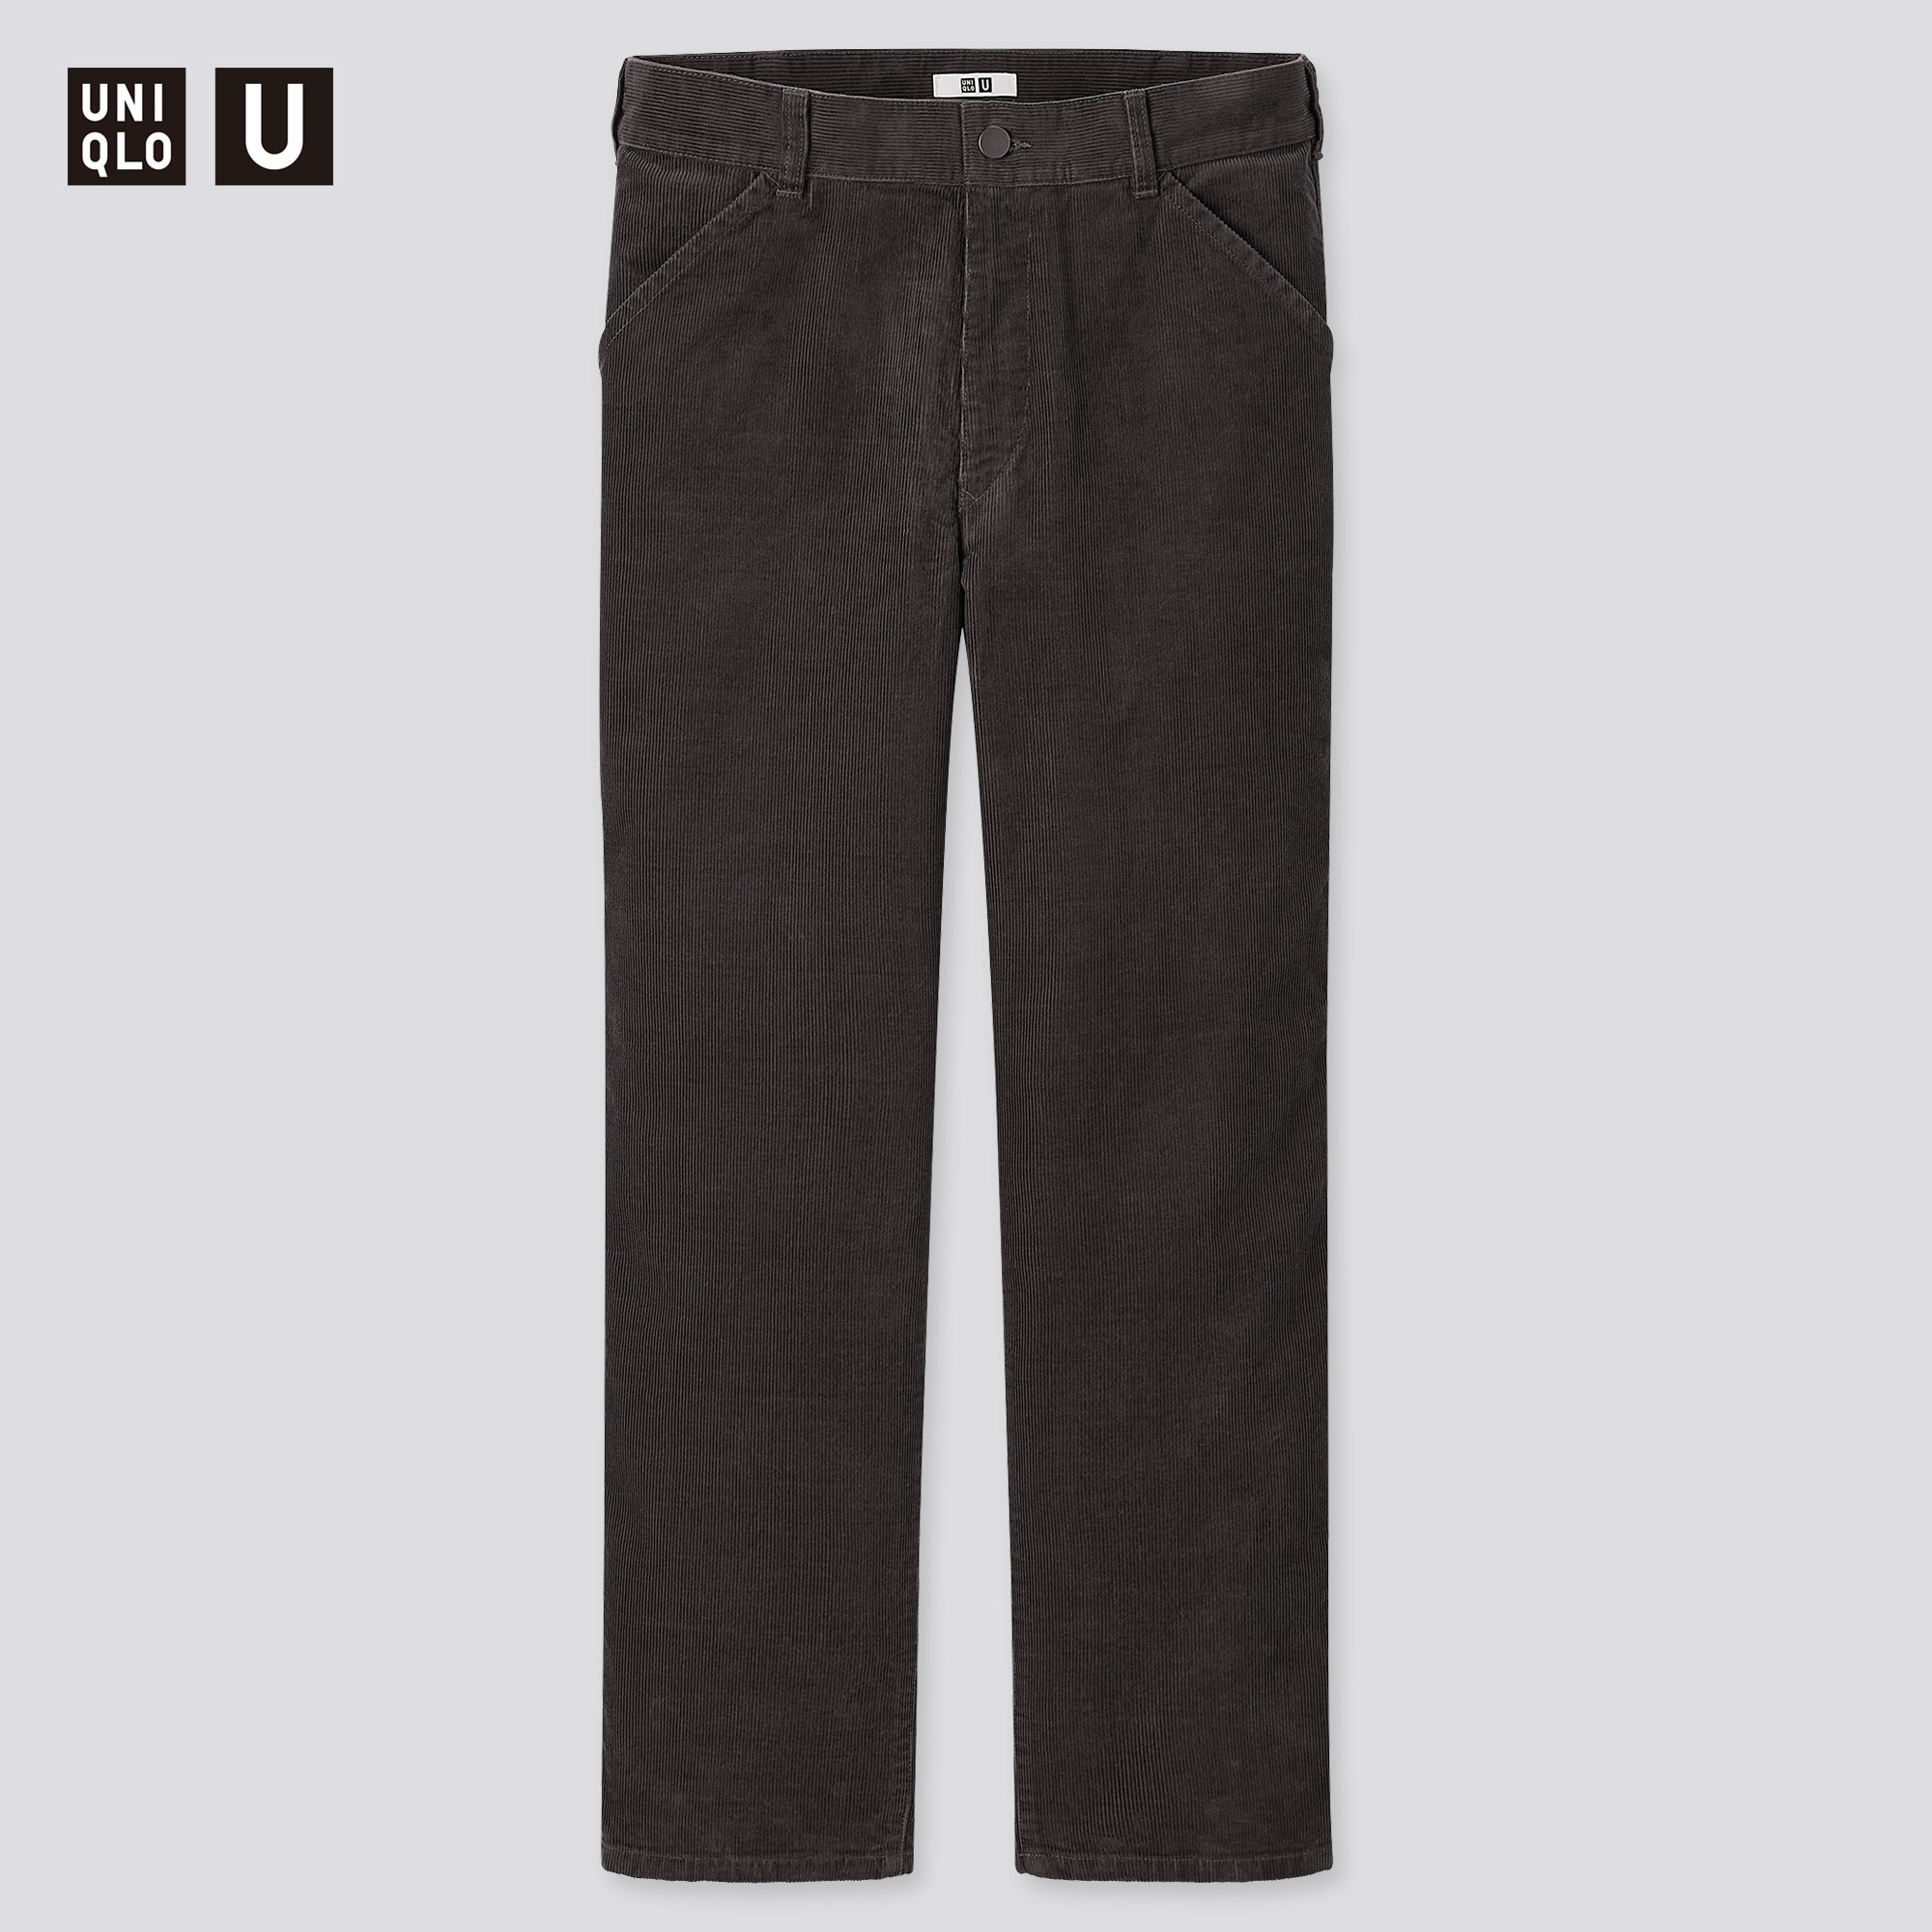 Uniqlo Pants Mens 37 / 91 Beig Chinos Trousers Straight Leg Regular Fit  37x29 | eBay